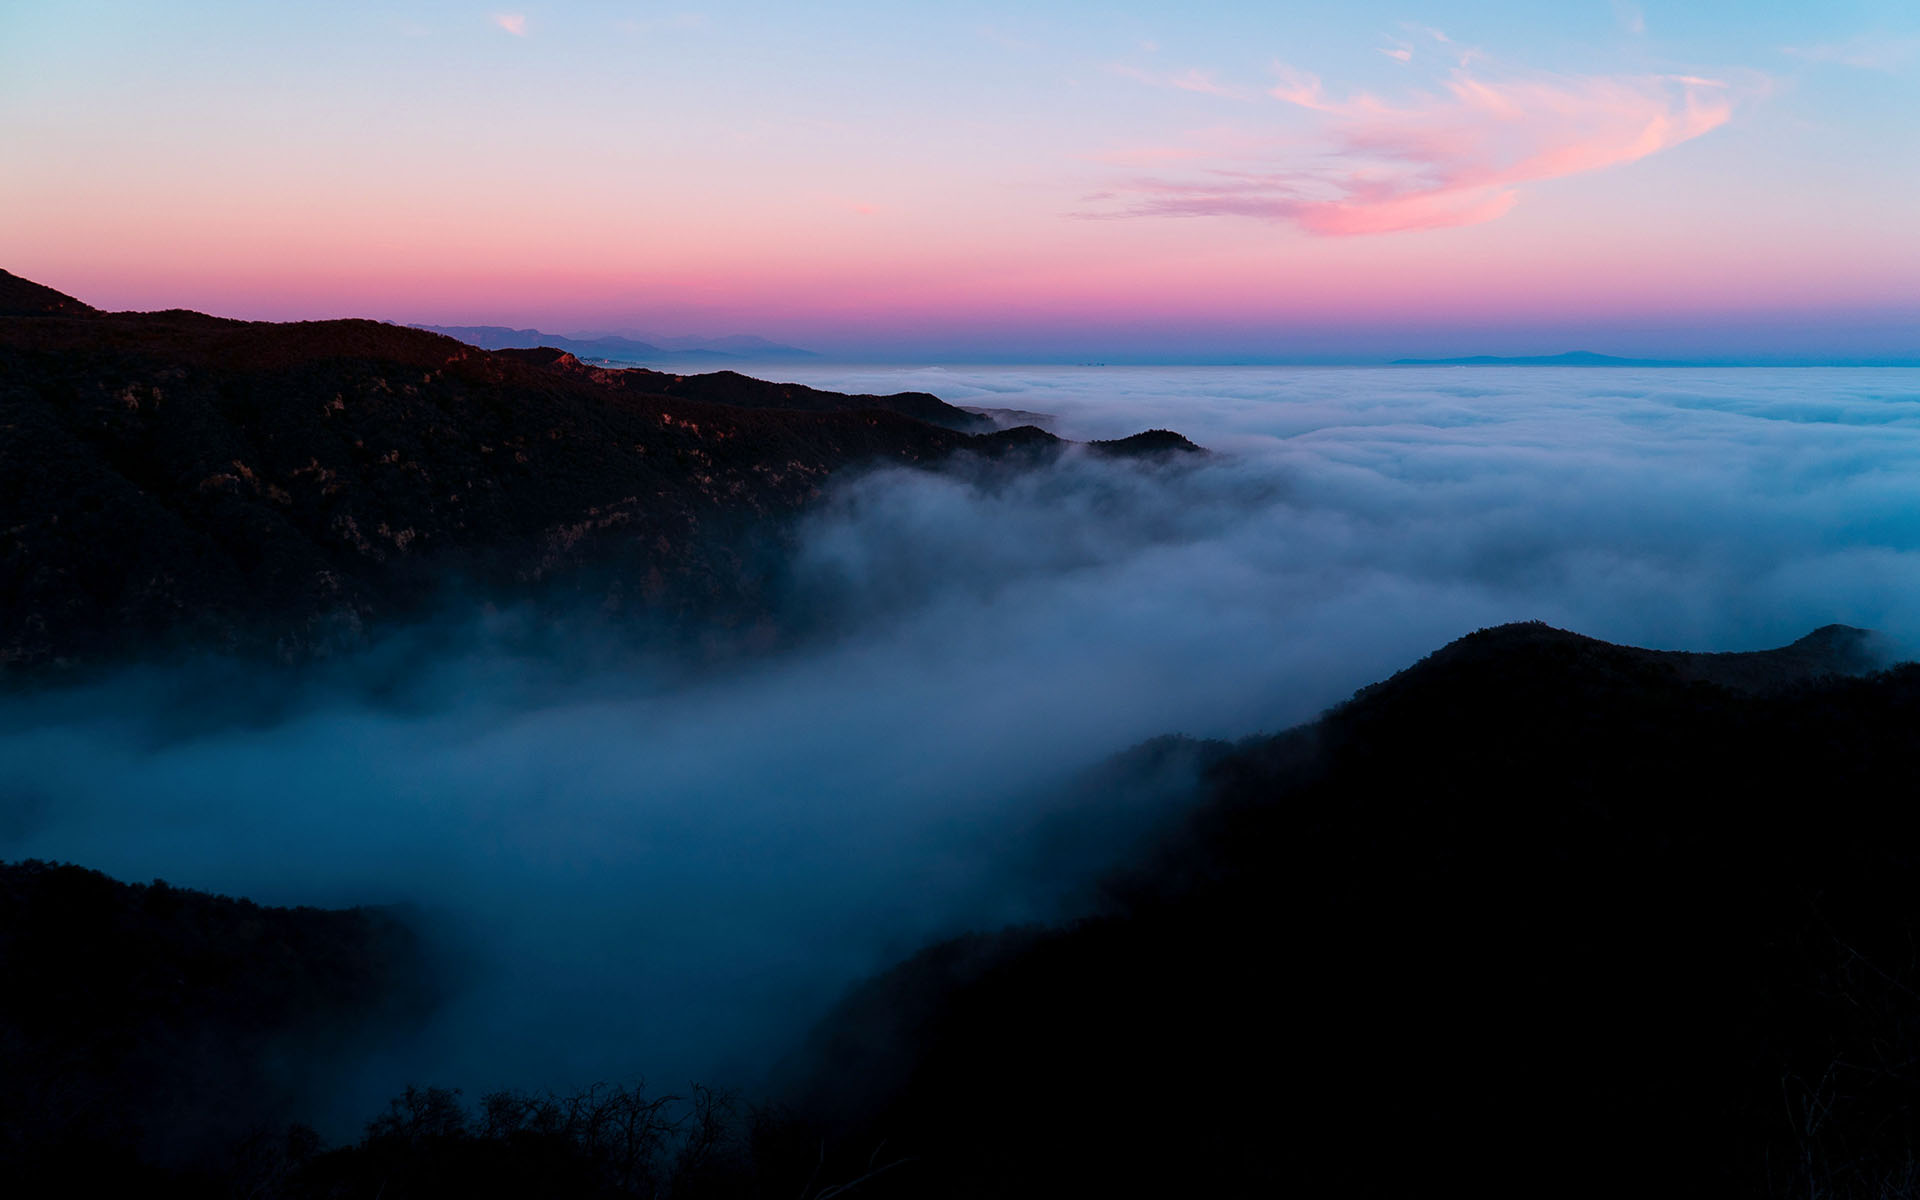 Foggy Los Angeles Basin and Santa Monica Mountains